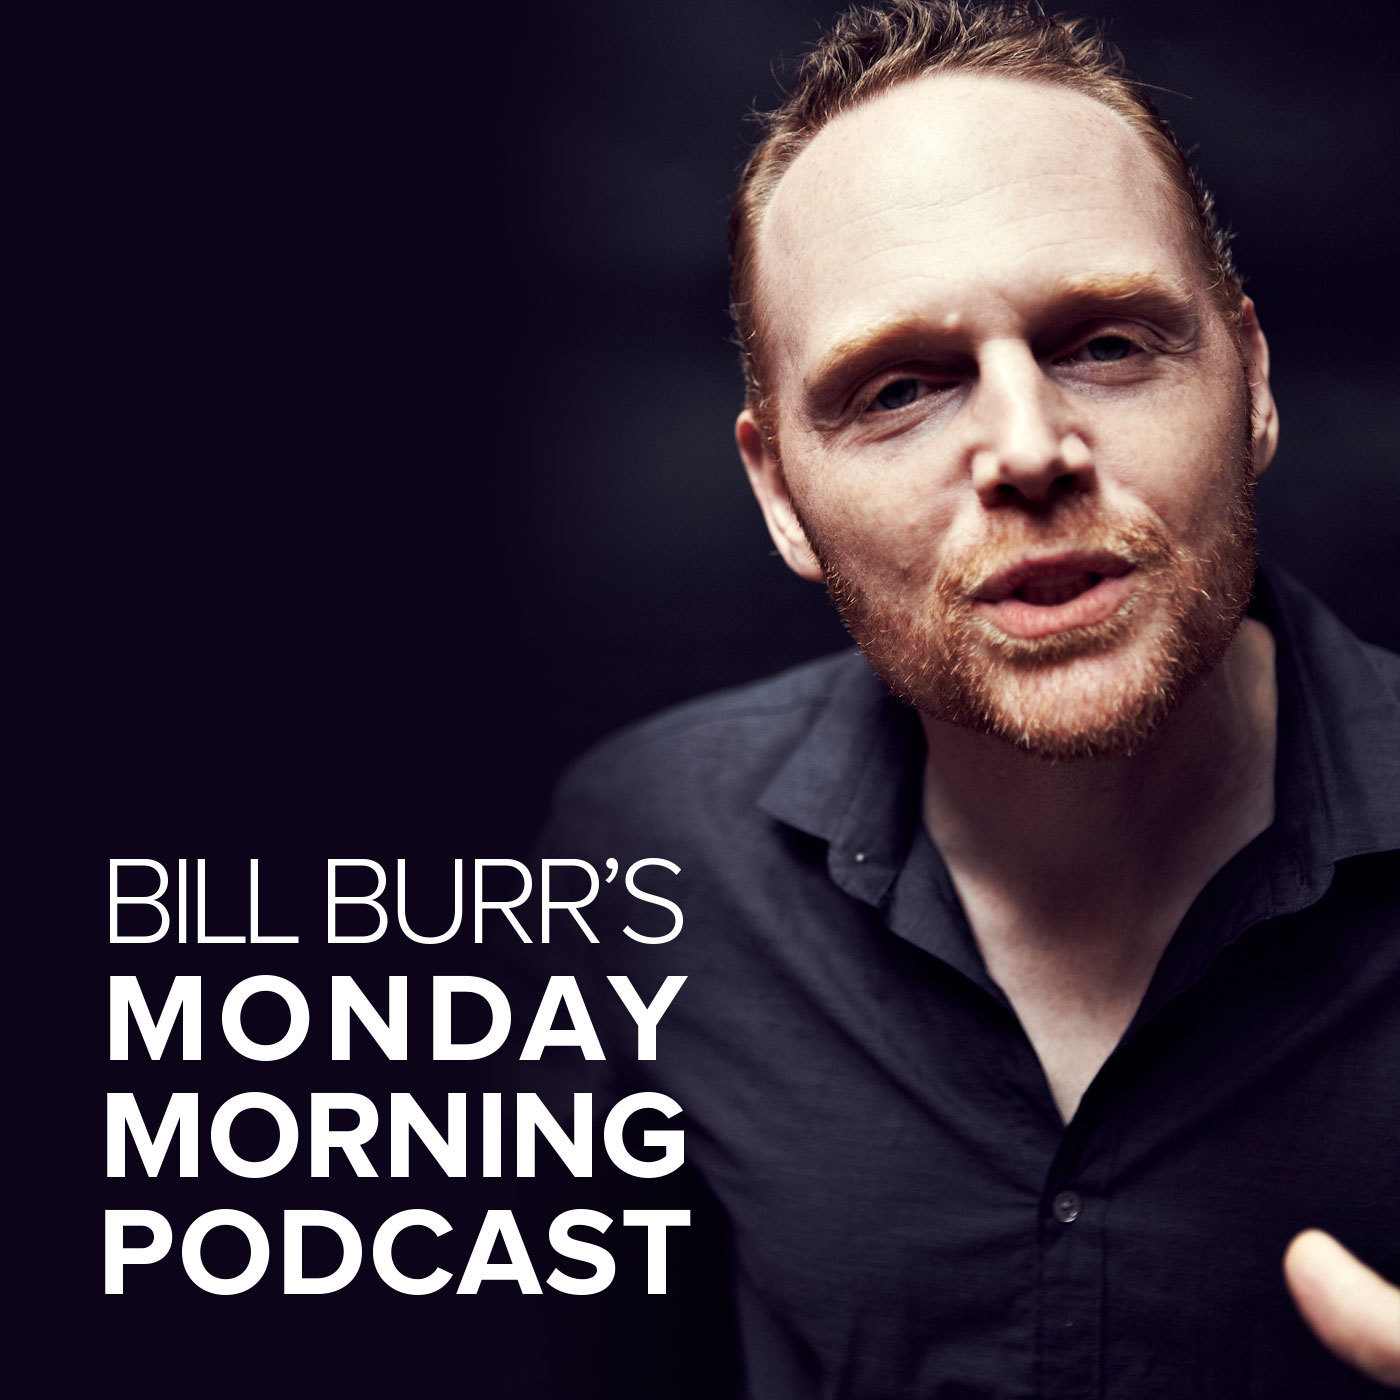 Monday Morning Podcast 12-23-13